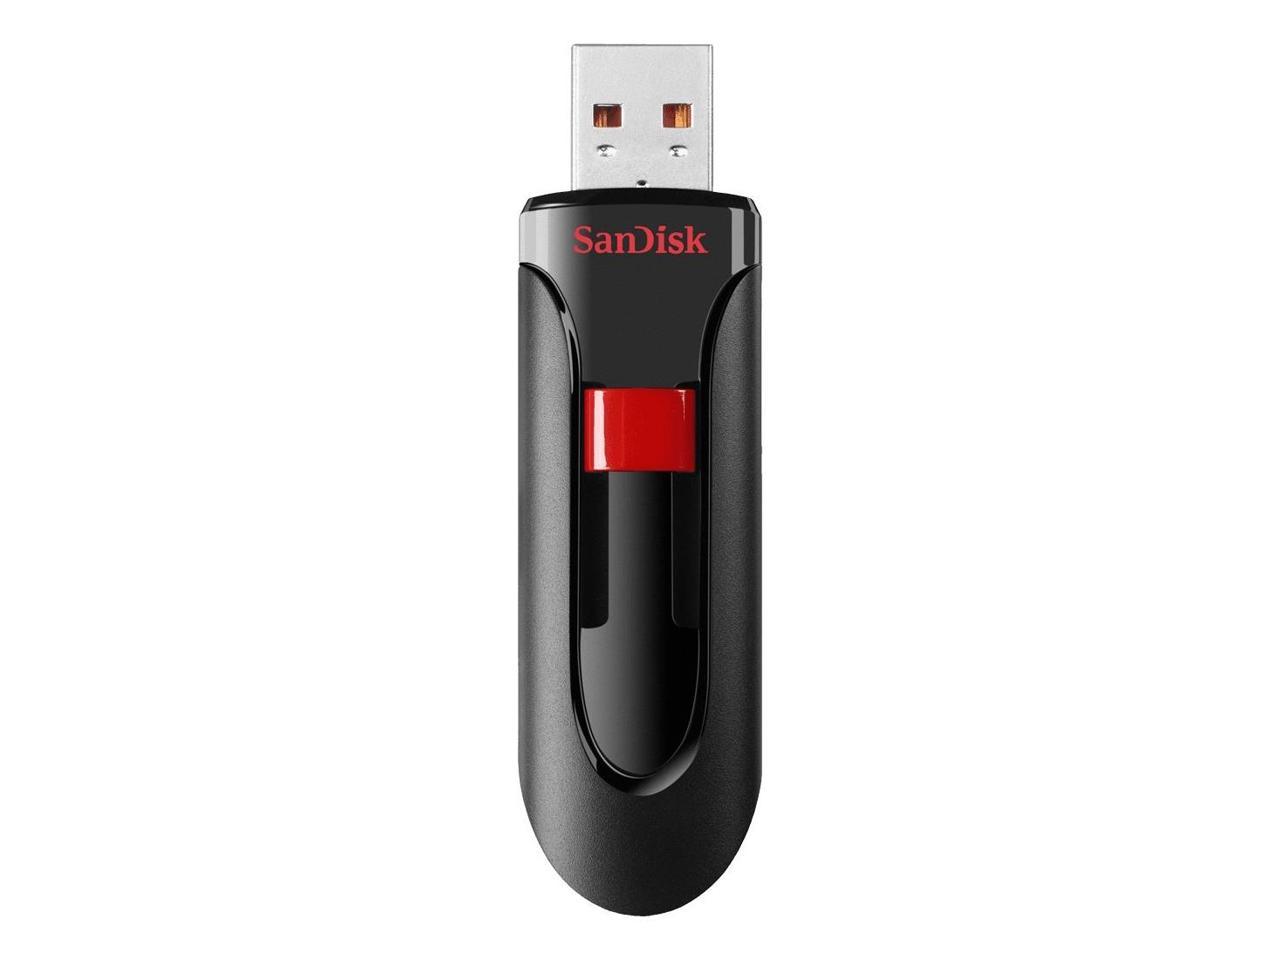 SanDisk 16GB USB 3.0 Drive - Newegg.com